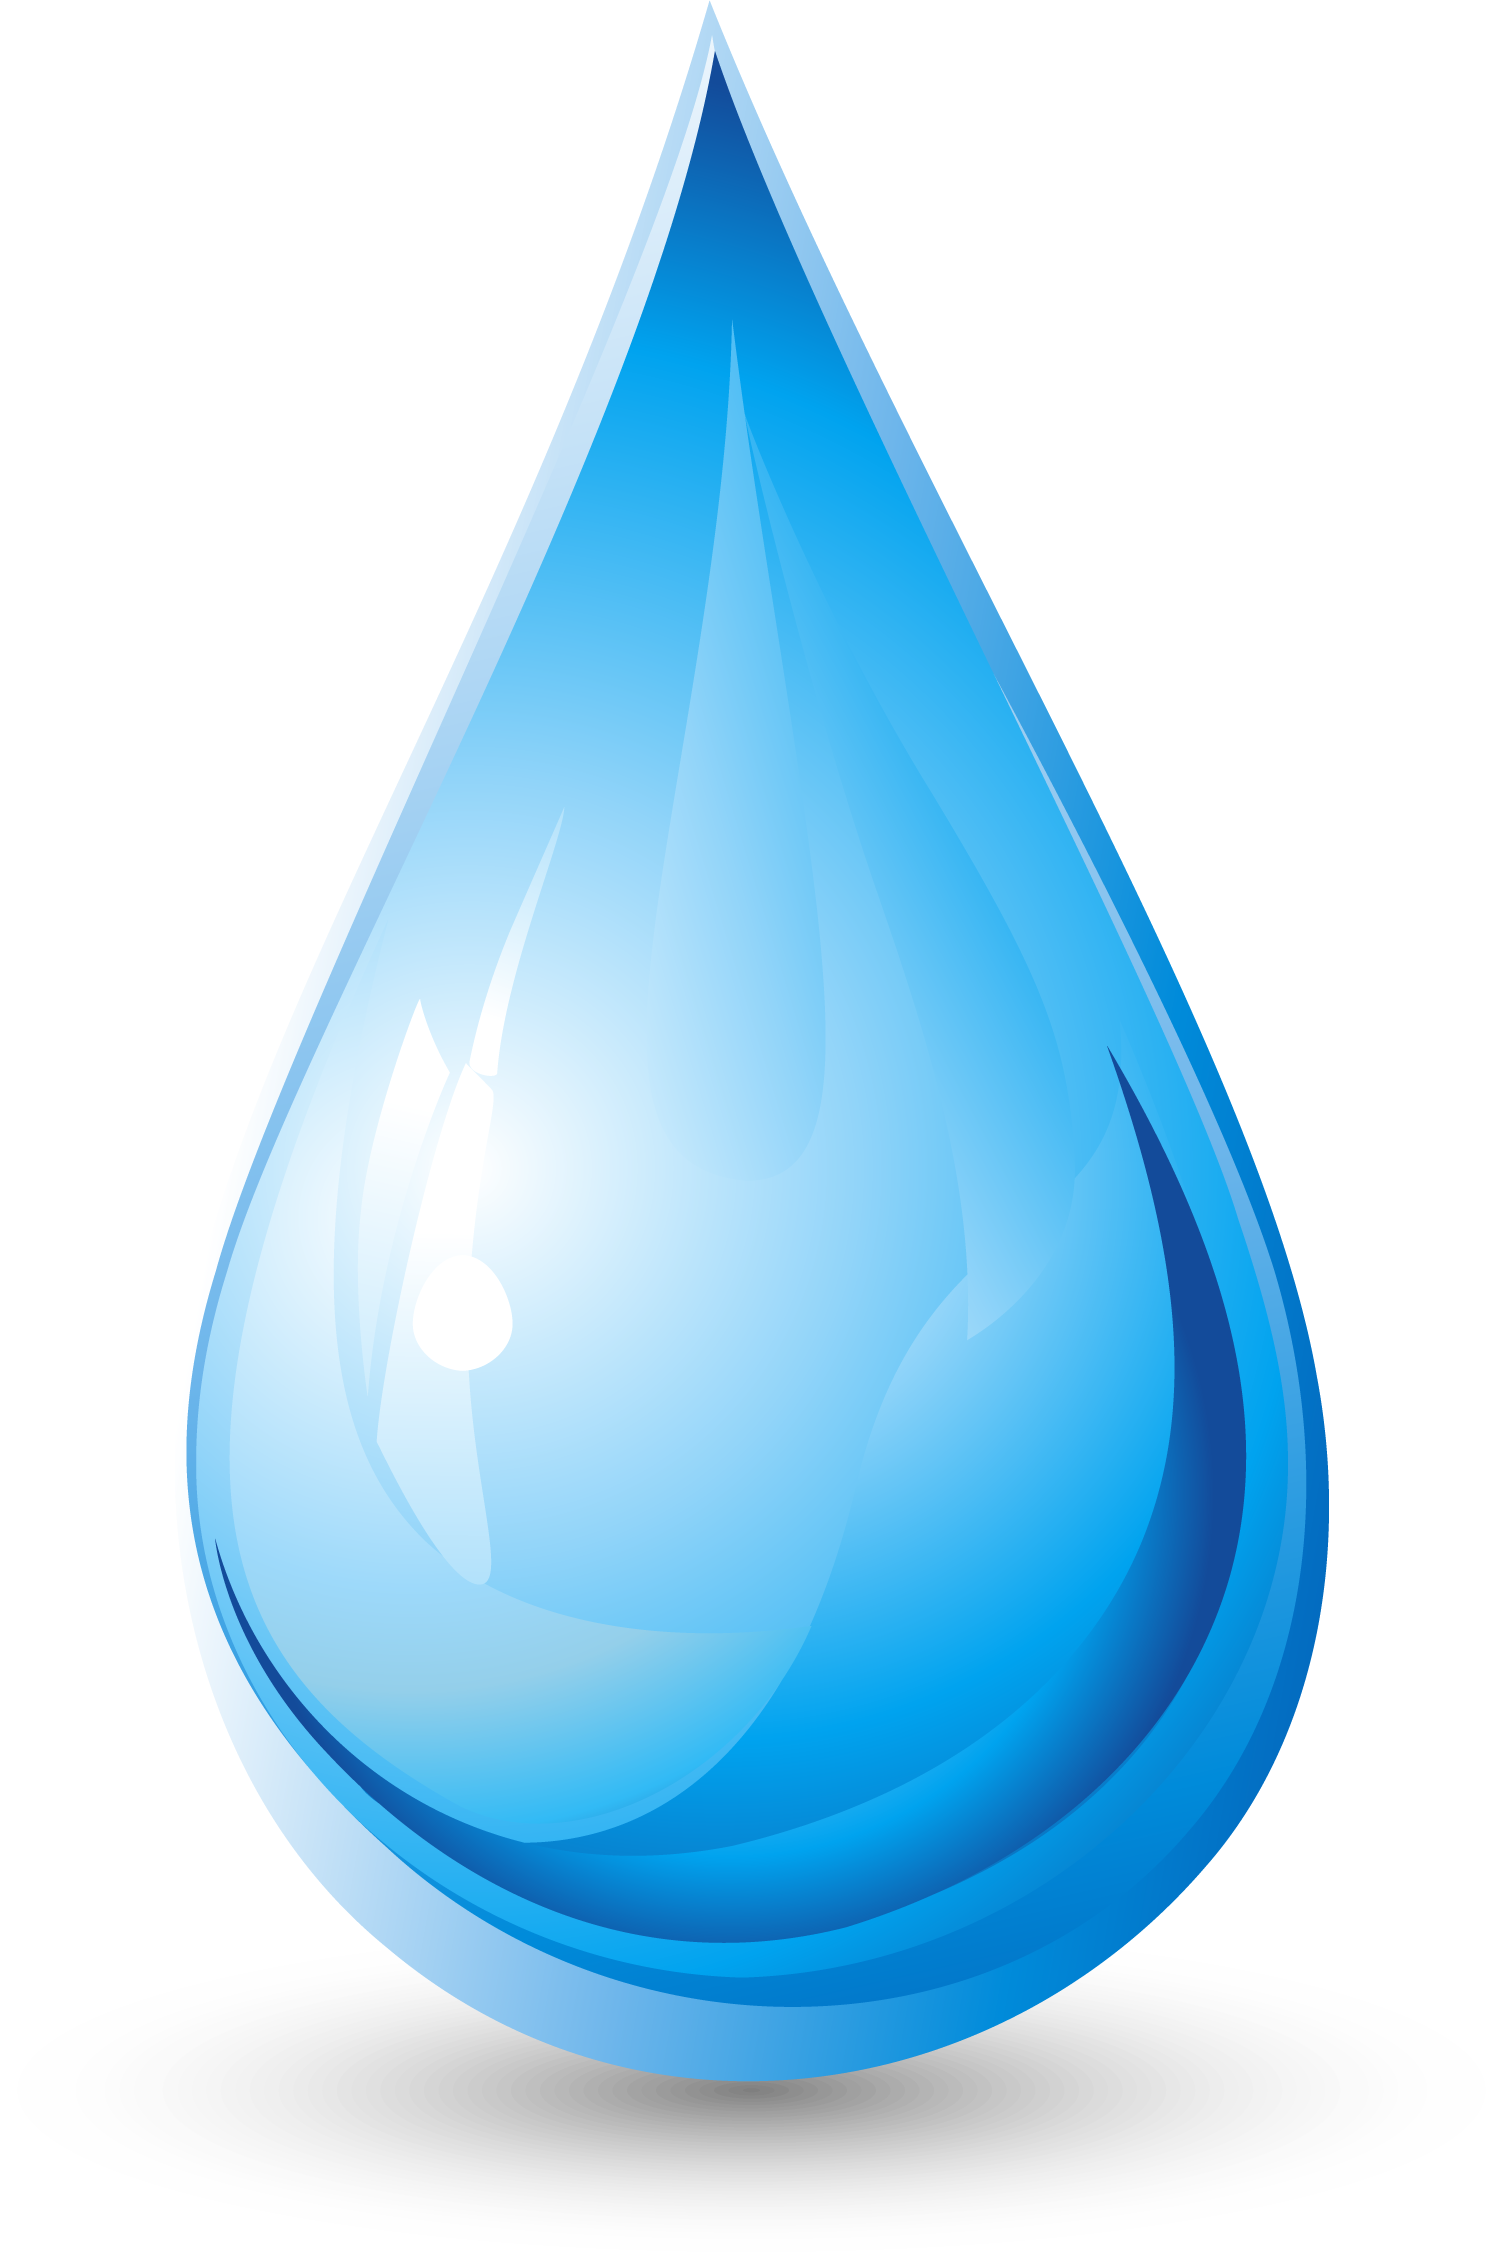 Download Vector Of Drop Water Drop Water Free Download Image Hq Png Image Freepngimg